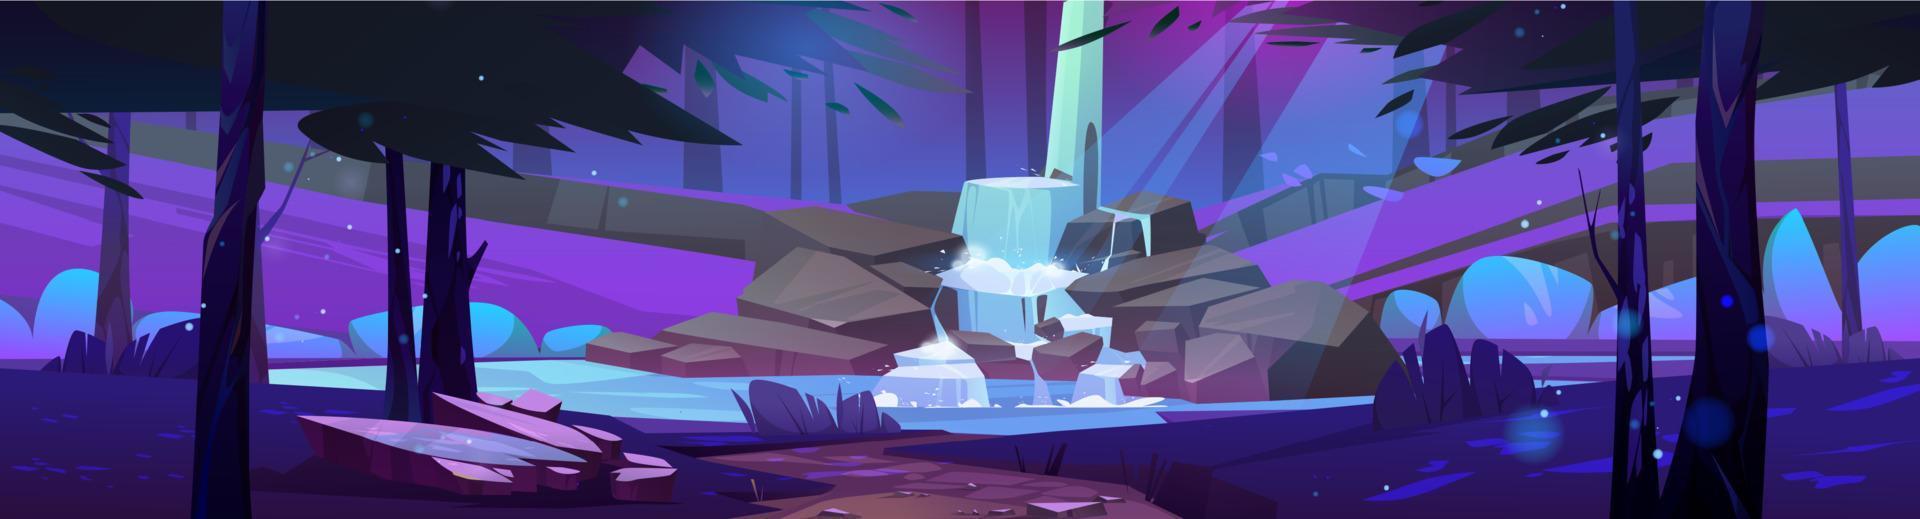 Waterfall jet in night forest cartoon landscape vector